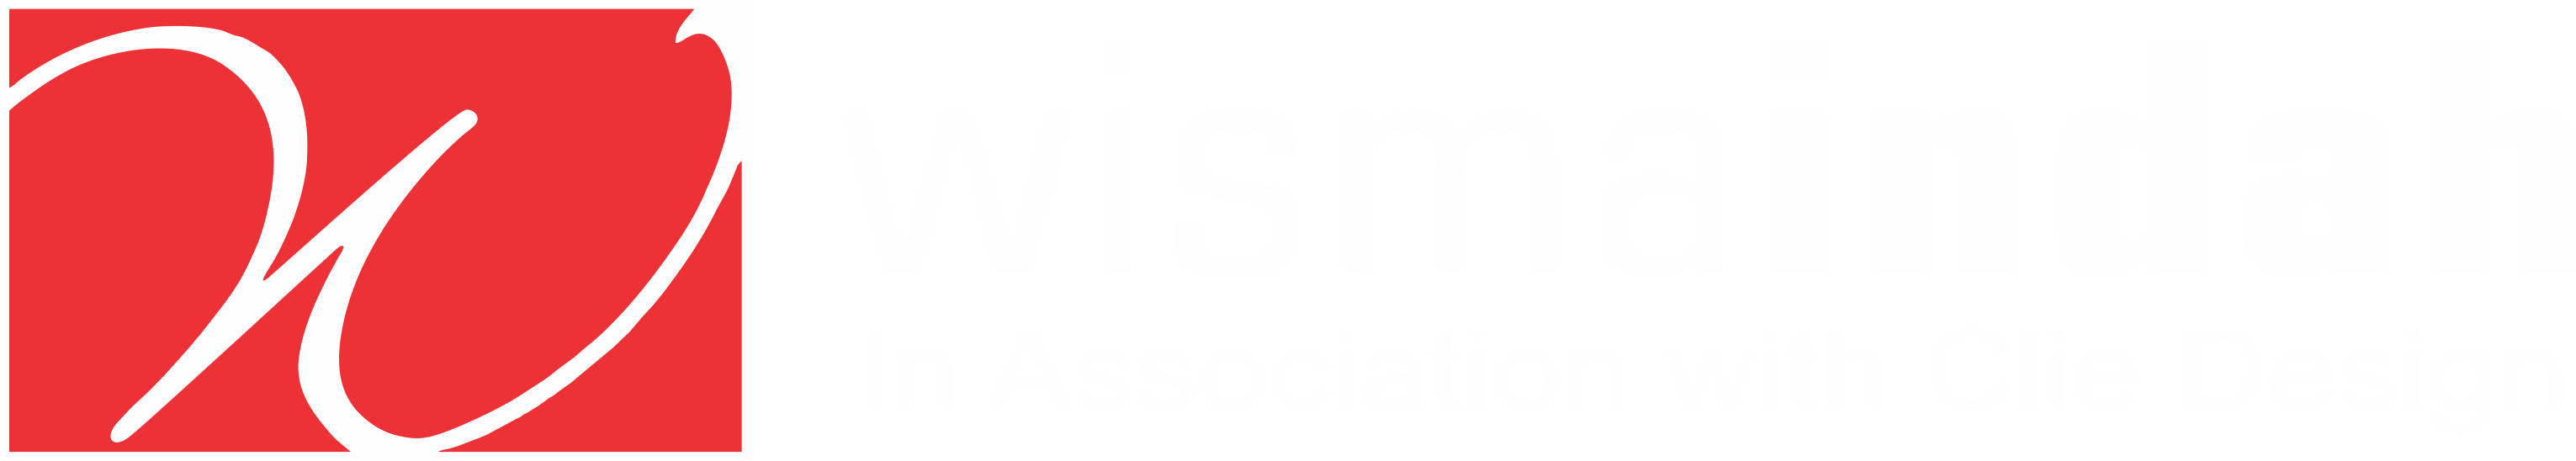 logo wisma indah